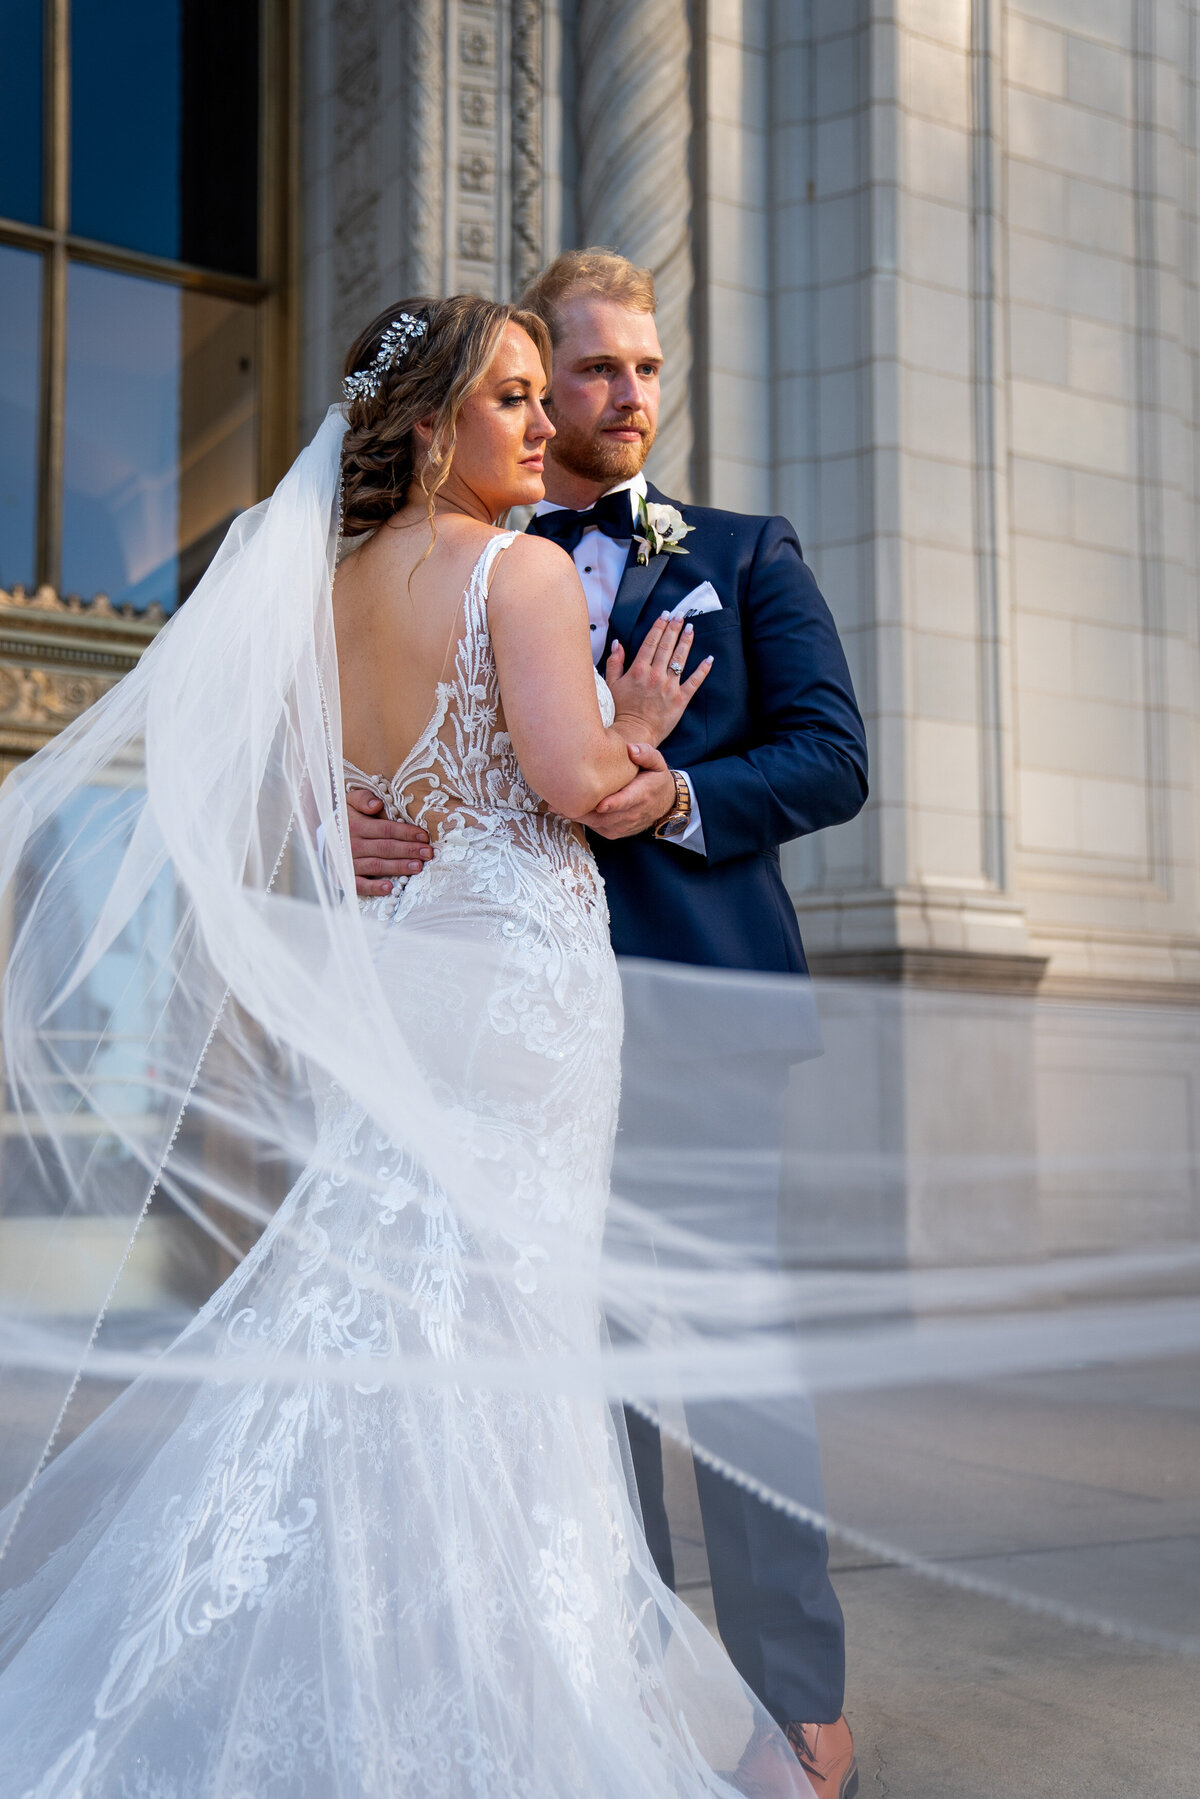 65Intercontinental-Chicago-Hotel-Wedding-Photos-Lauren-Ashlely-Studios